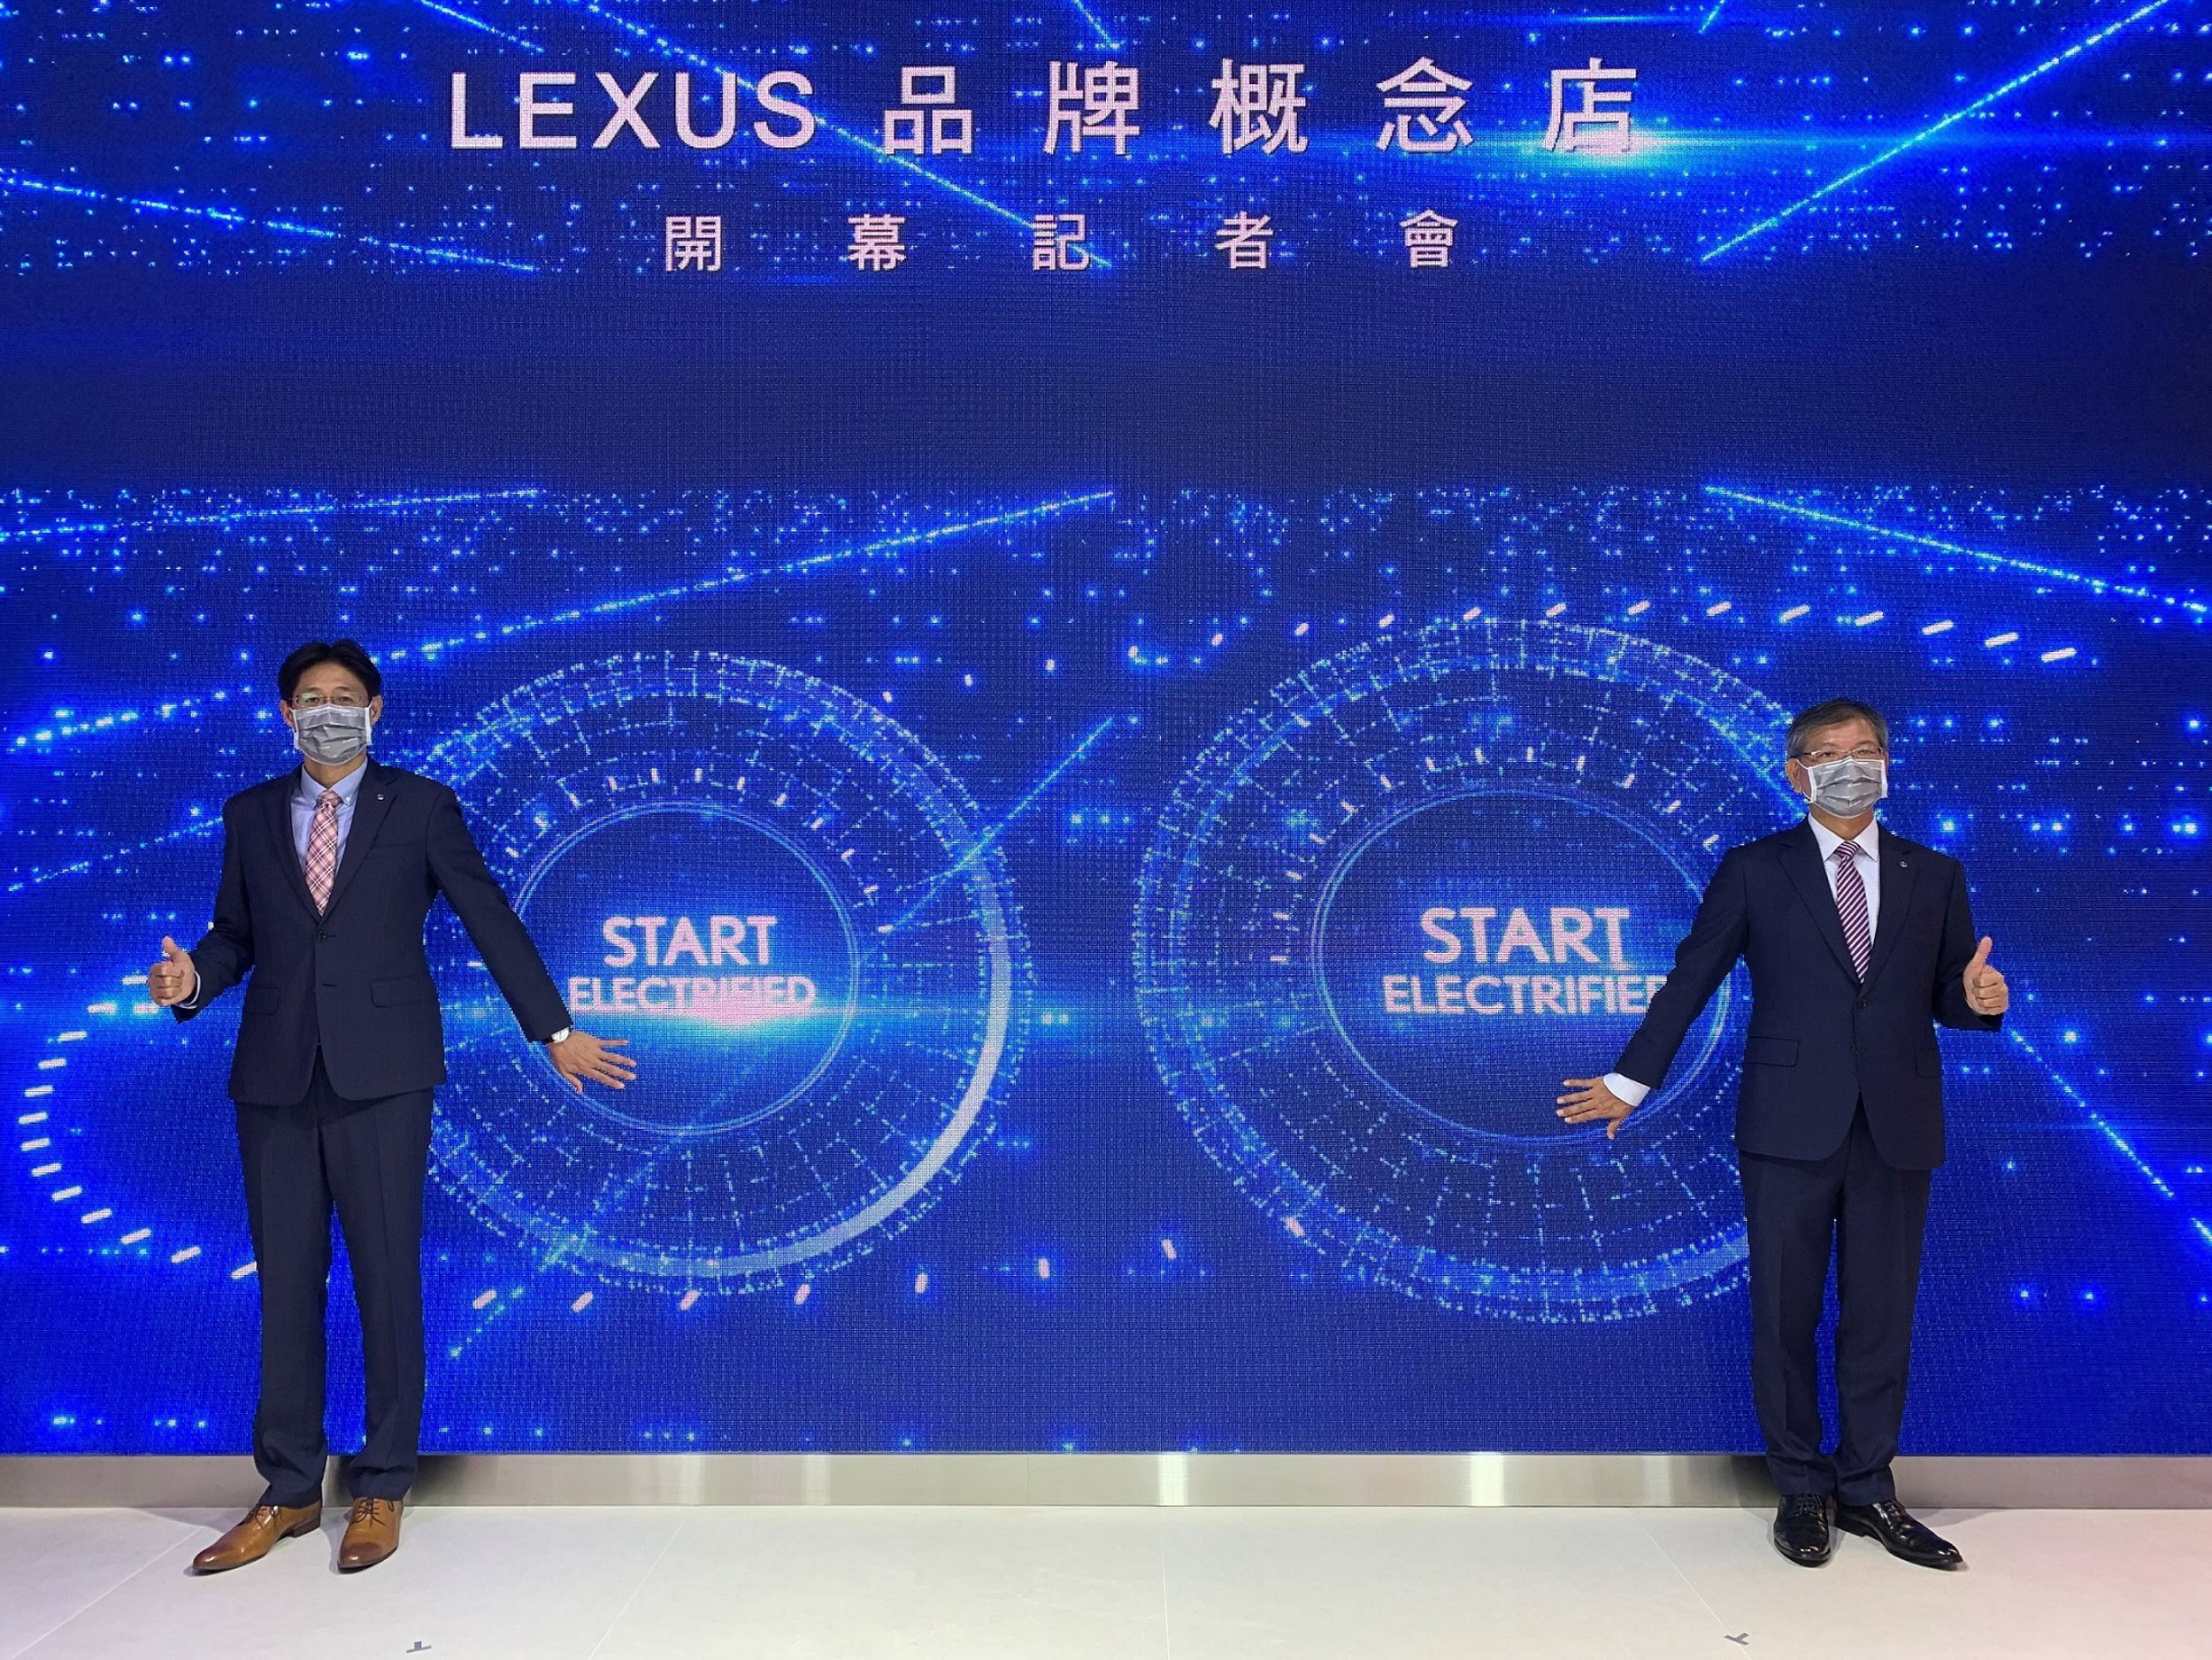 Lexus 營業本部賴光雄協理與車輛部王立仁經理於 LEXUS ELECTRIFIED 品牌概念店揭幕儀式。